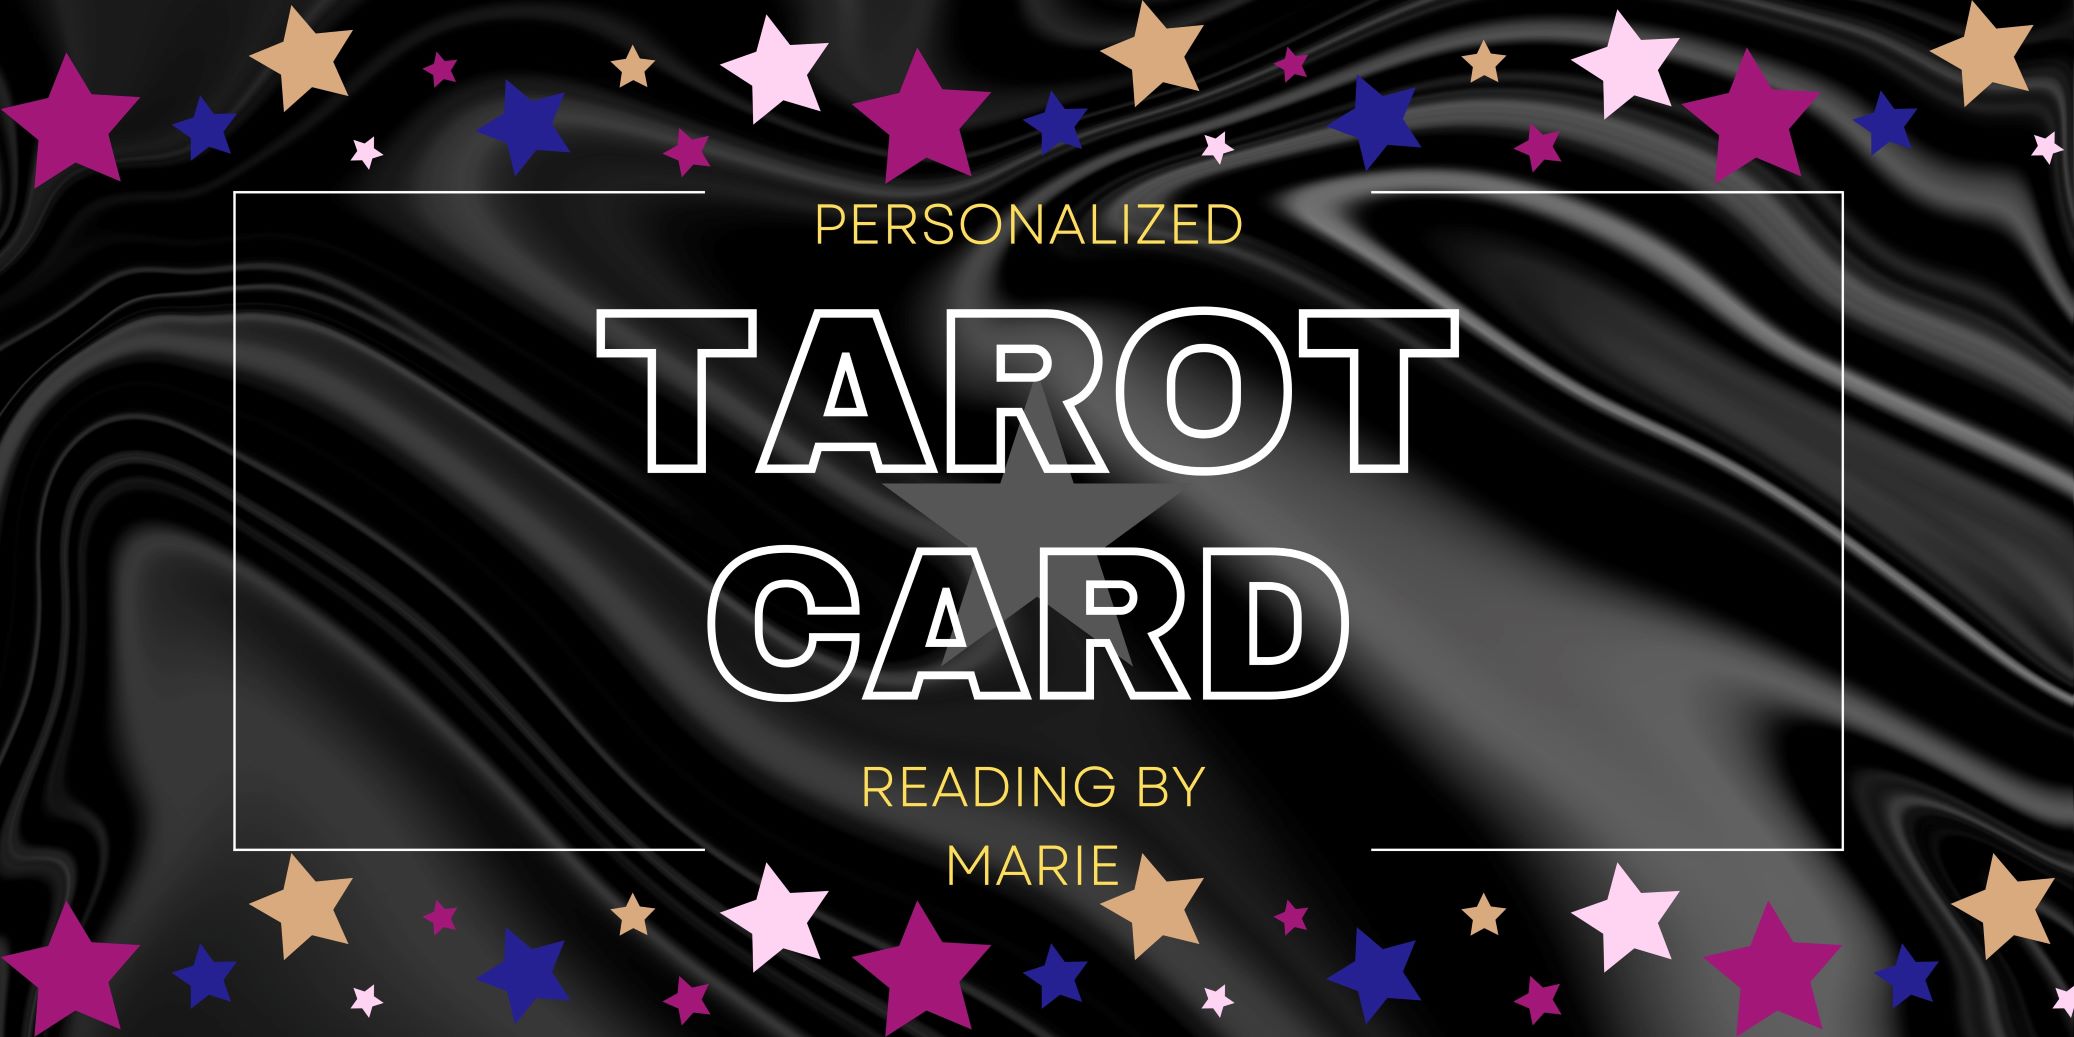 Get an Oracle tarot card reading